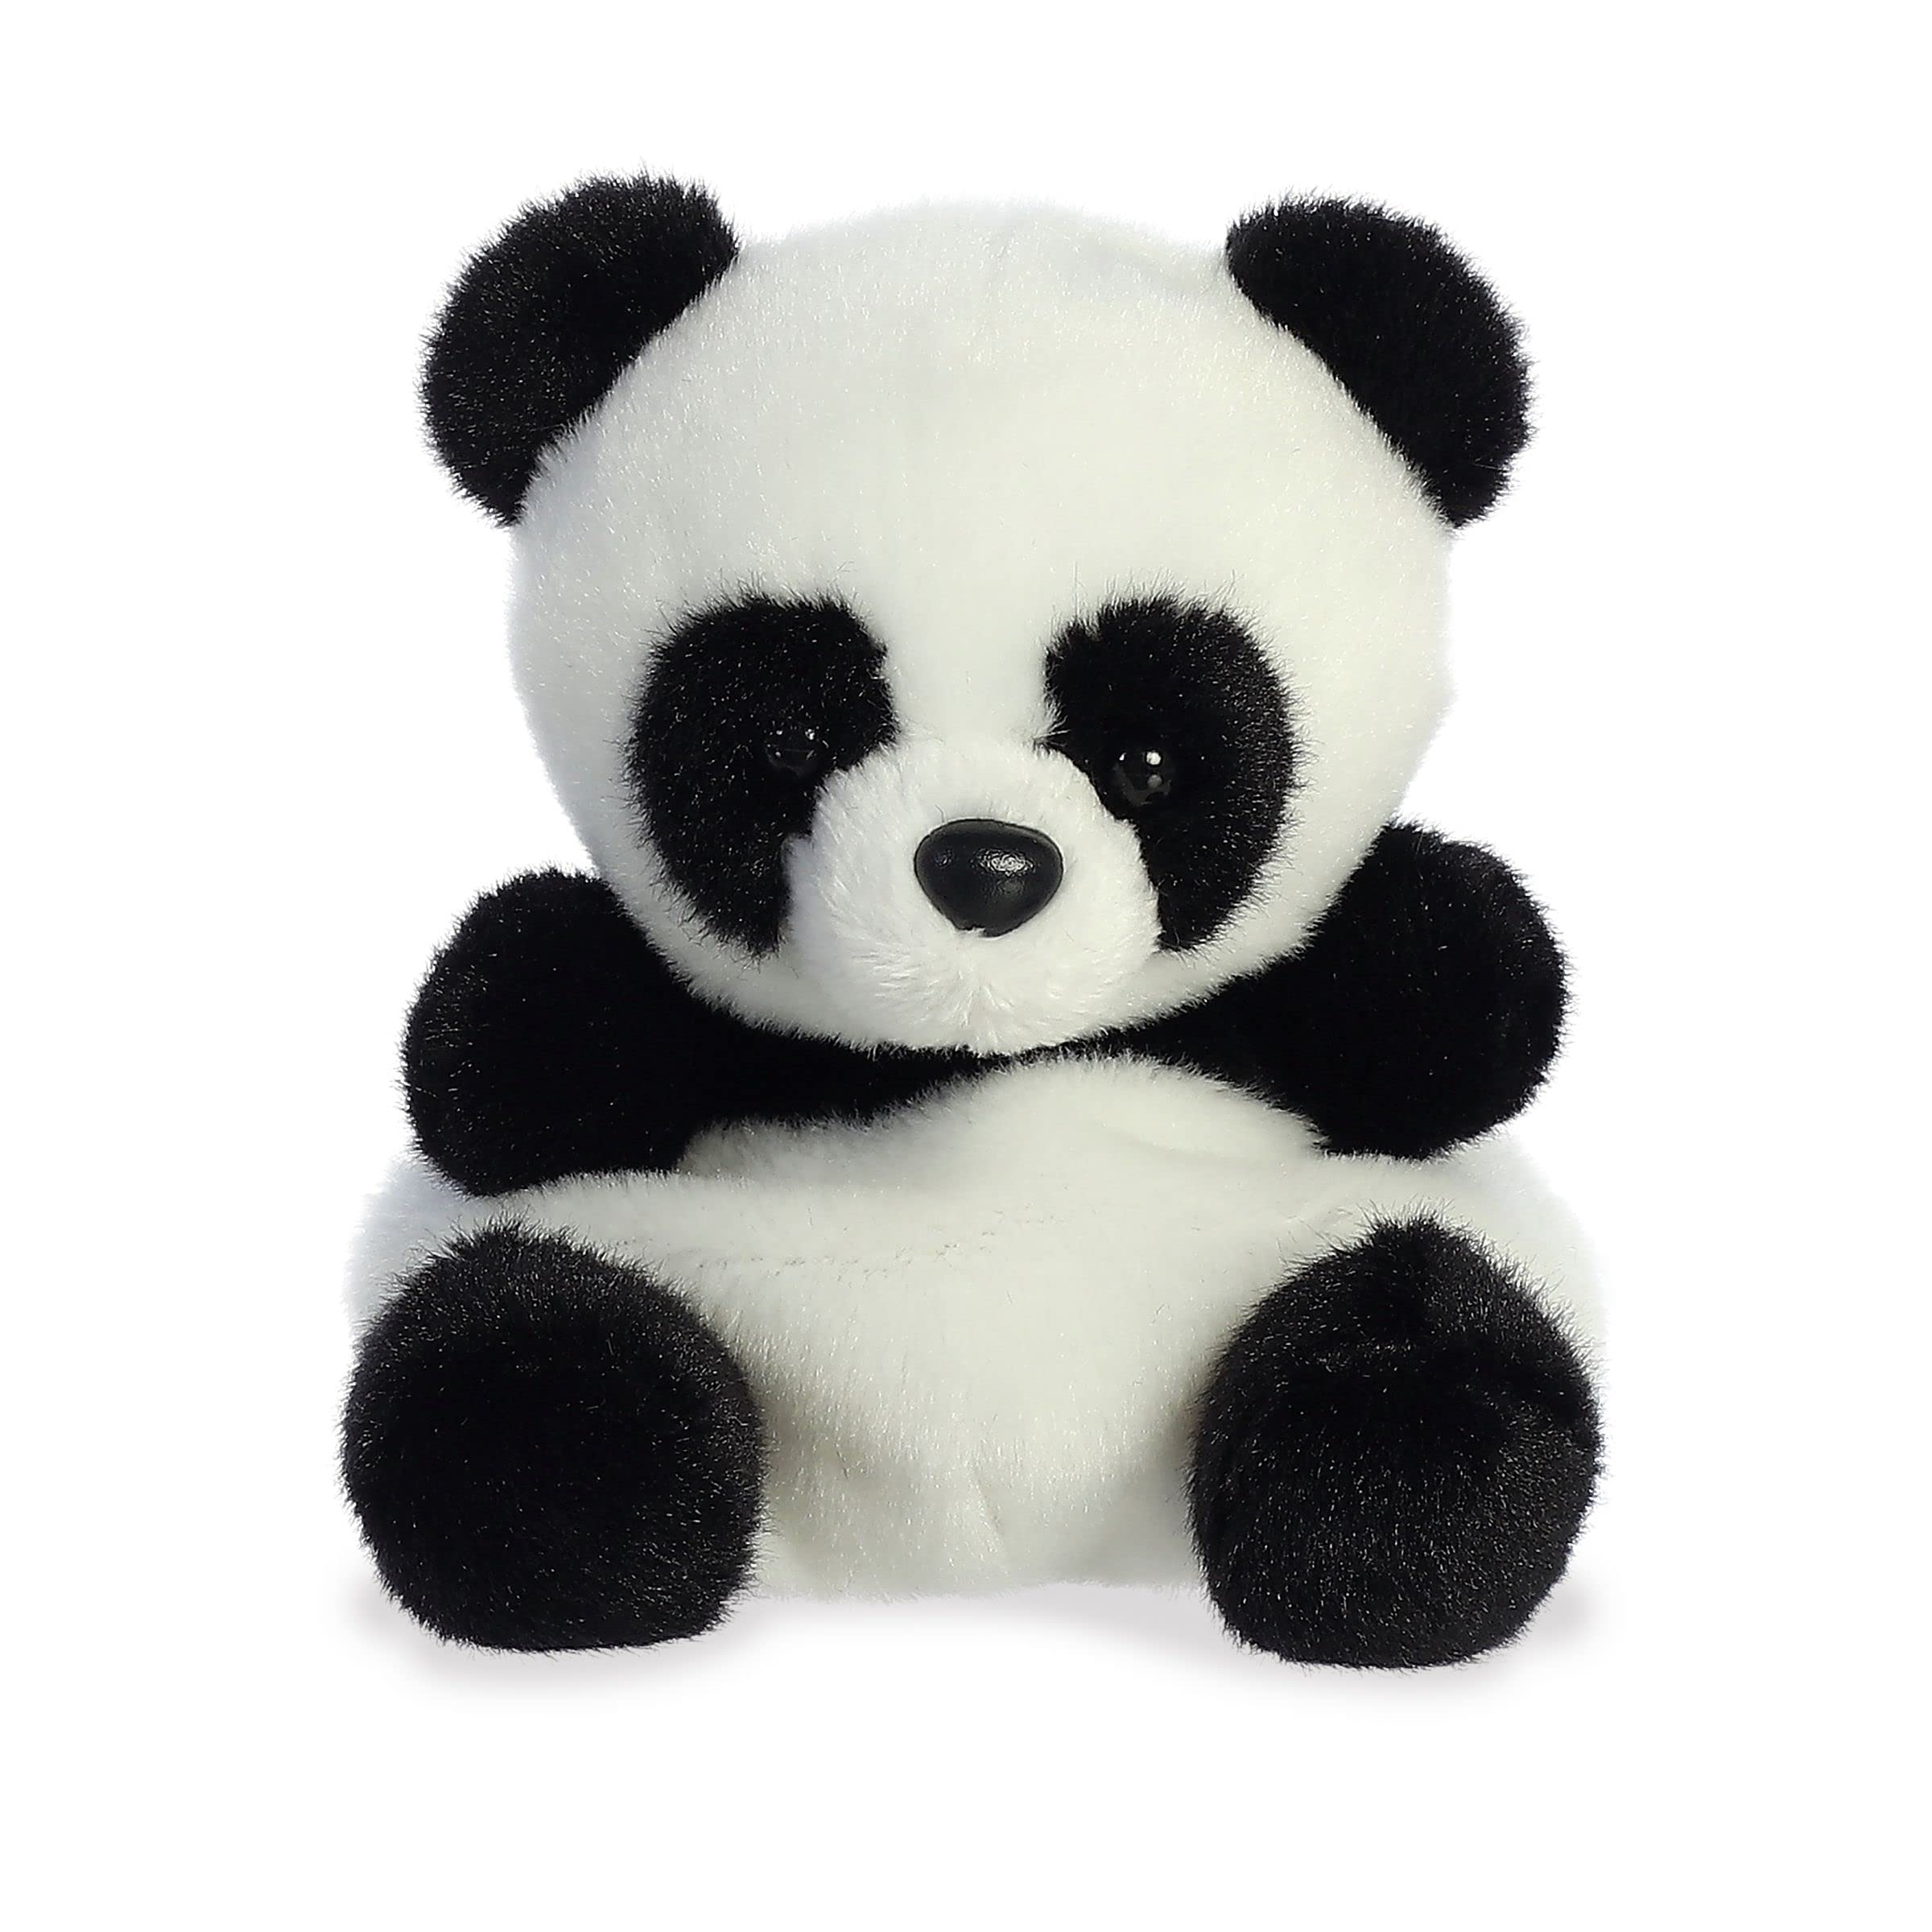 5" Aurora Palm Pals Bamboo Panda Stuffed Animal Plush Toy $6.60 + Free Shipping w/ Prime or on $35+